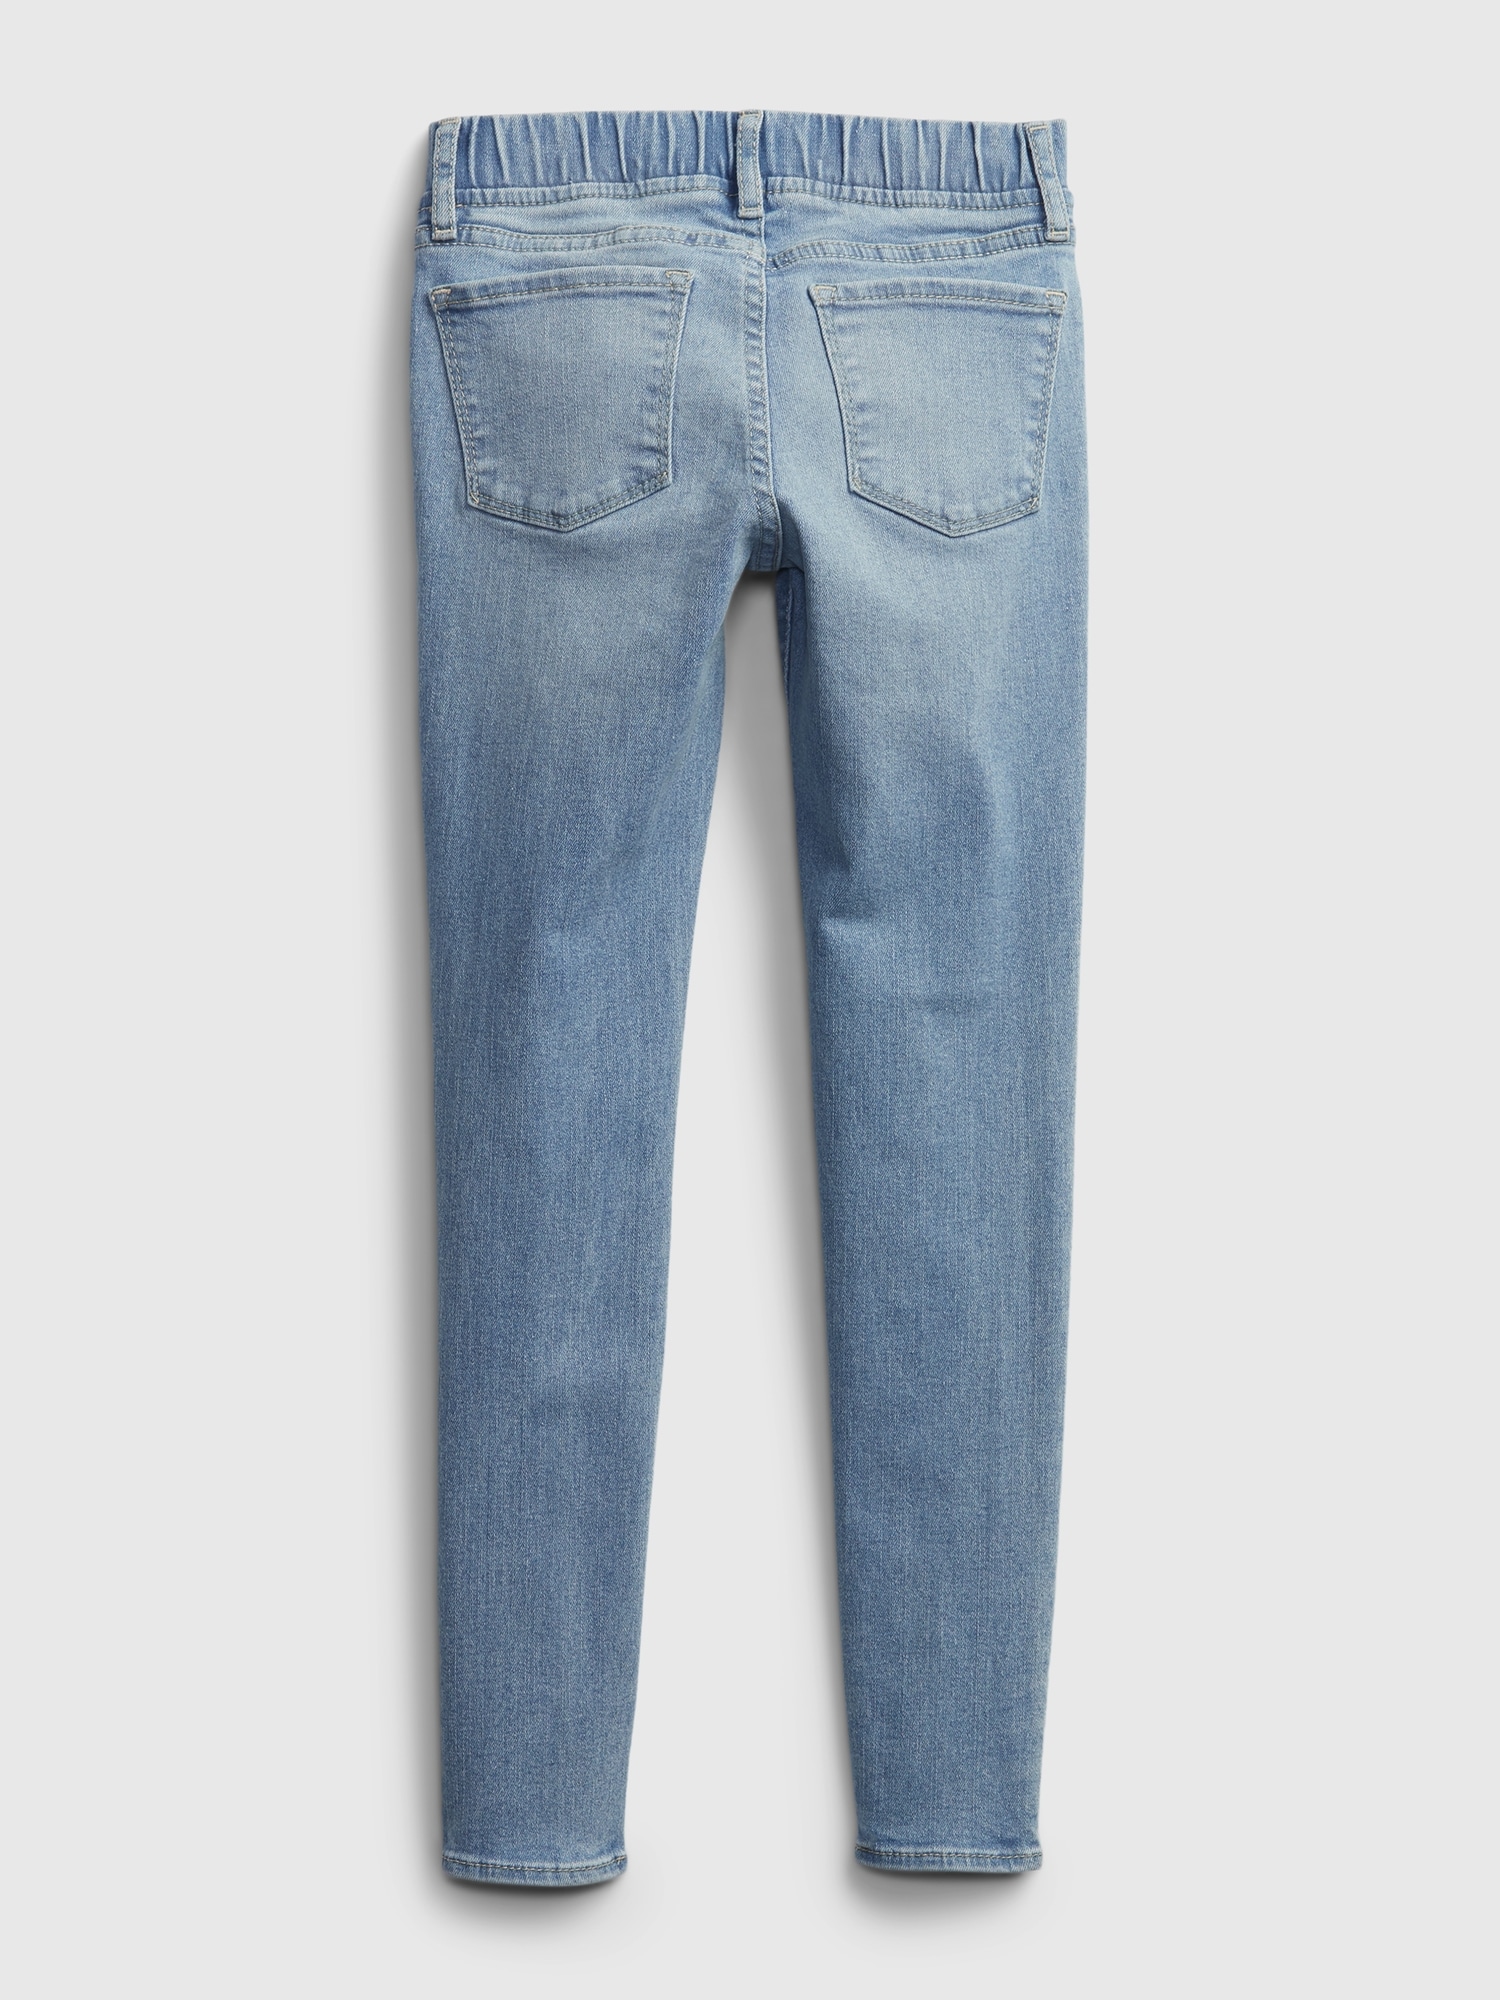 PRADA Jeggings Jeans Leggings UK 10 Fits More like 12 Faded Black rrp £590